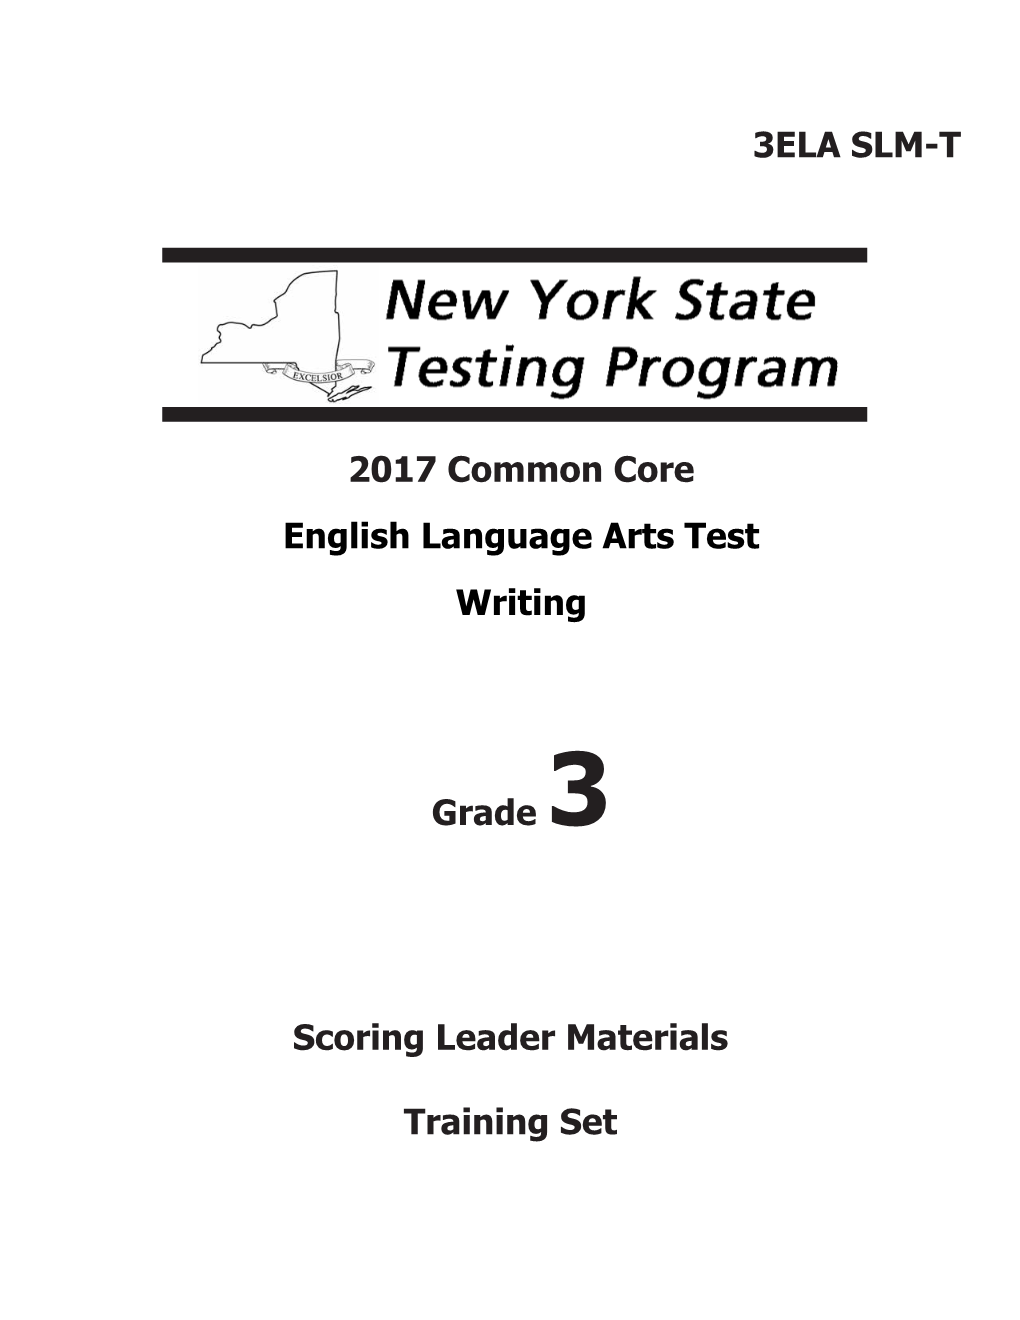 2017 Grade 3 English Language Arts Test Scoring Materials